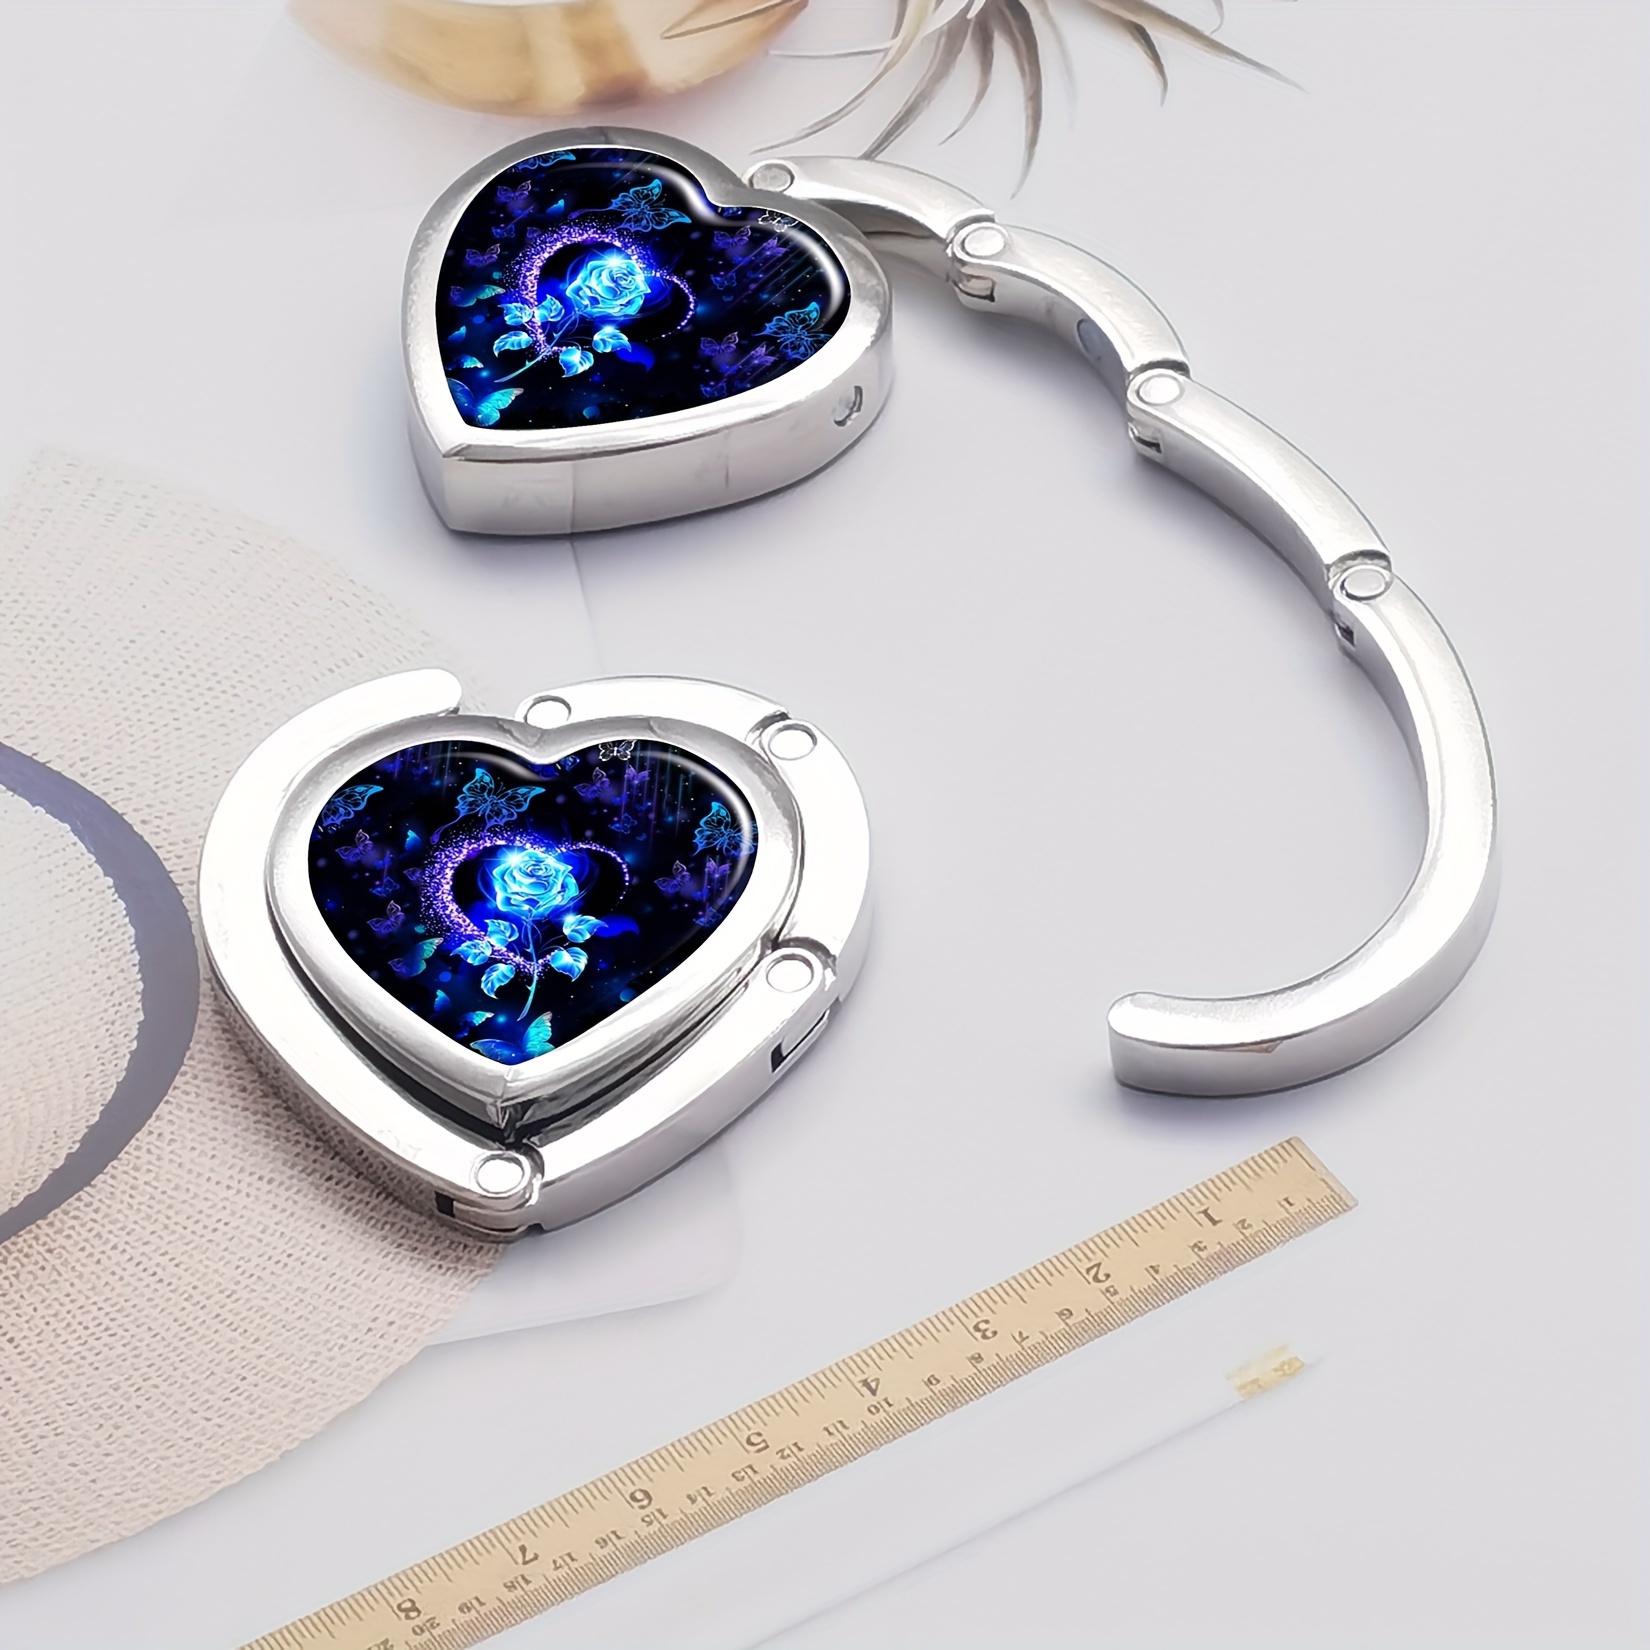 

Glowing Blue Rose Heart-shaped Foldable Purse Hanger - Portable Metal Table Hook For Bags & Keys